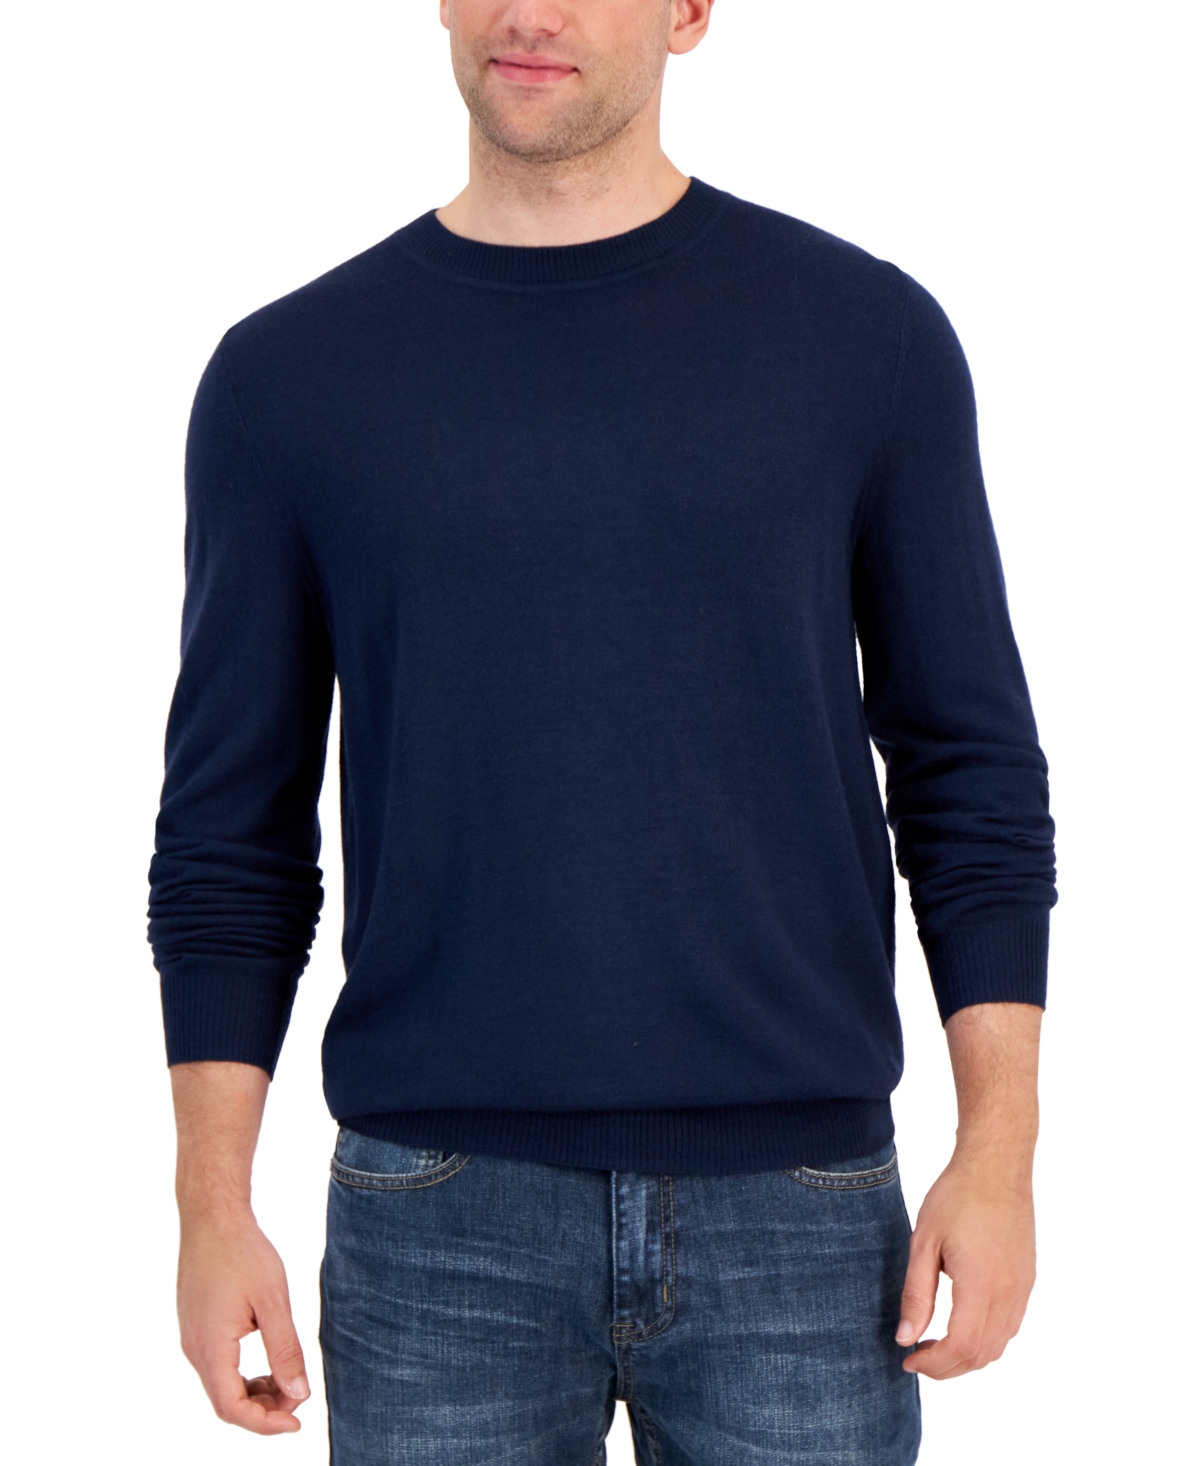 Men's Long-Sleeve Crewneck Merino Sweater, Created for Macy's - Neo Navy